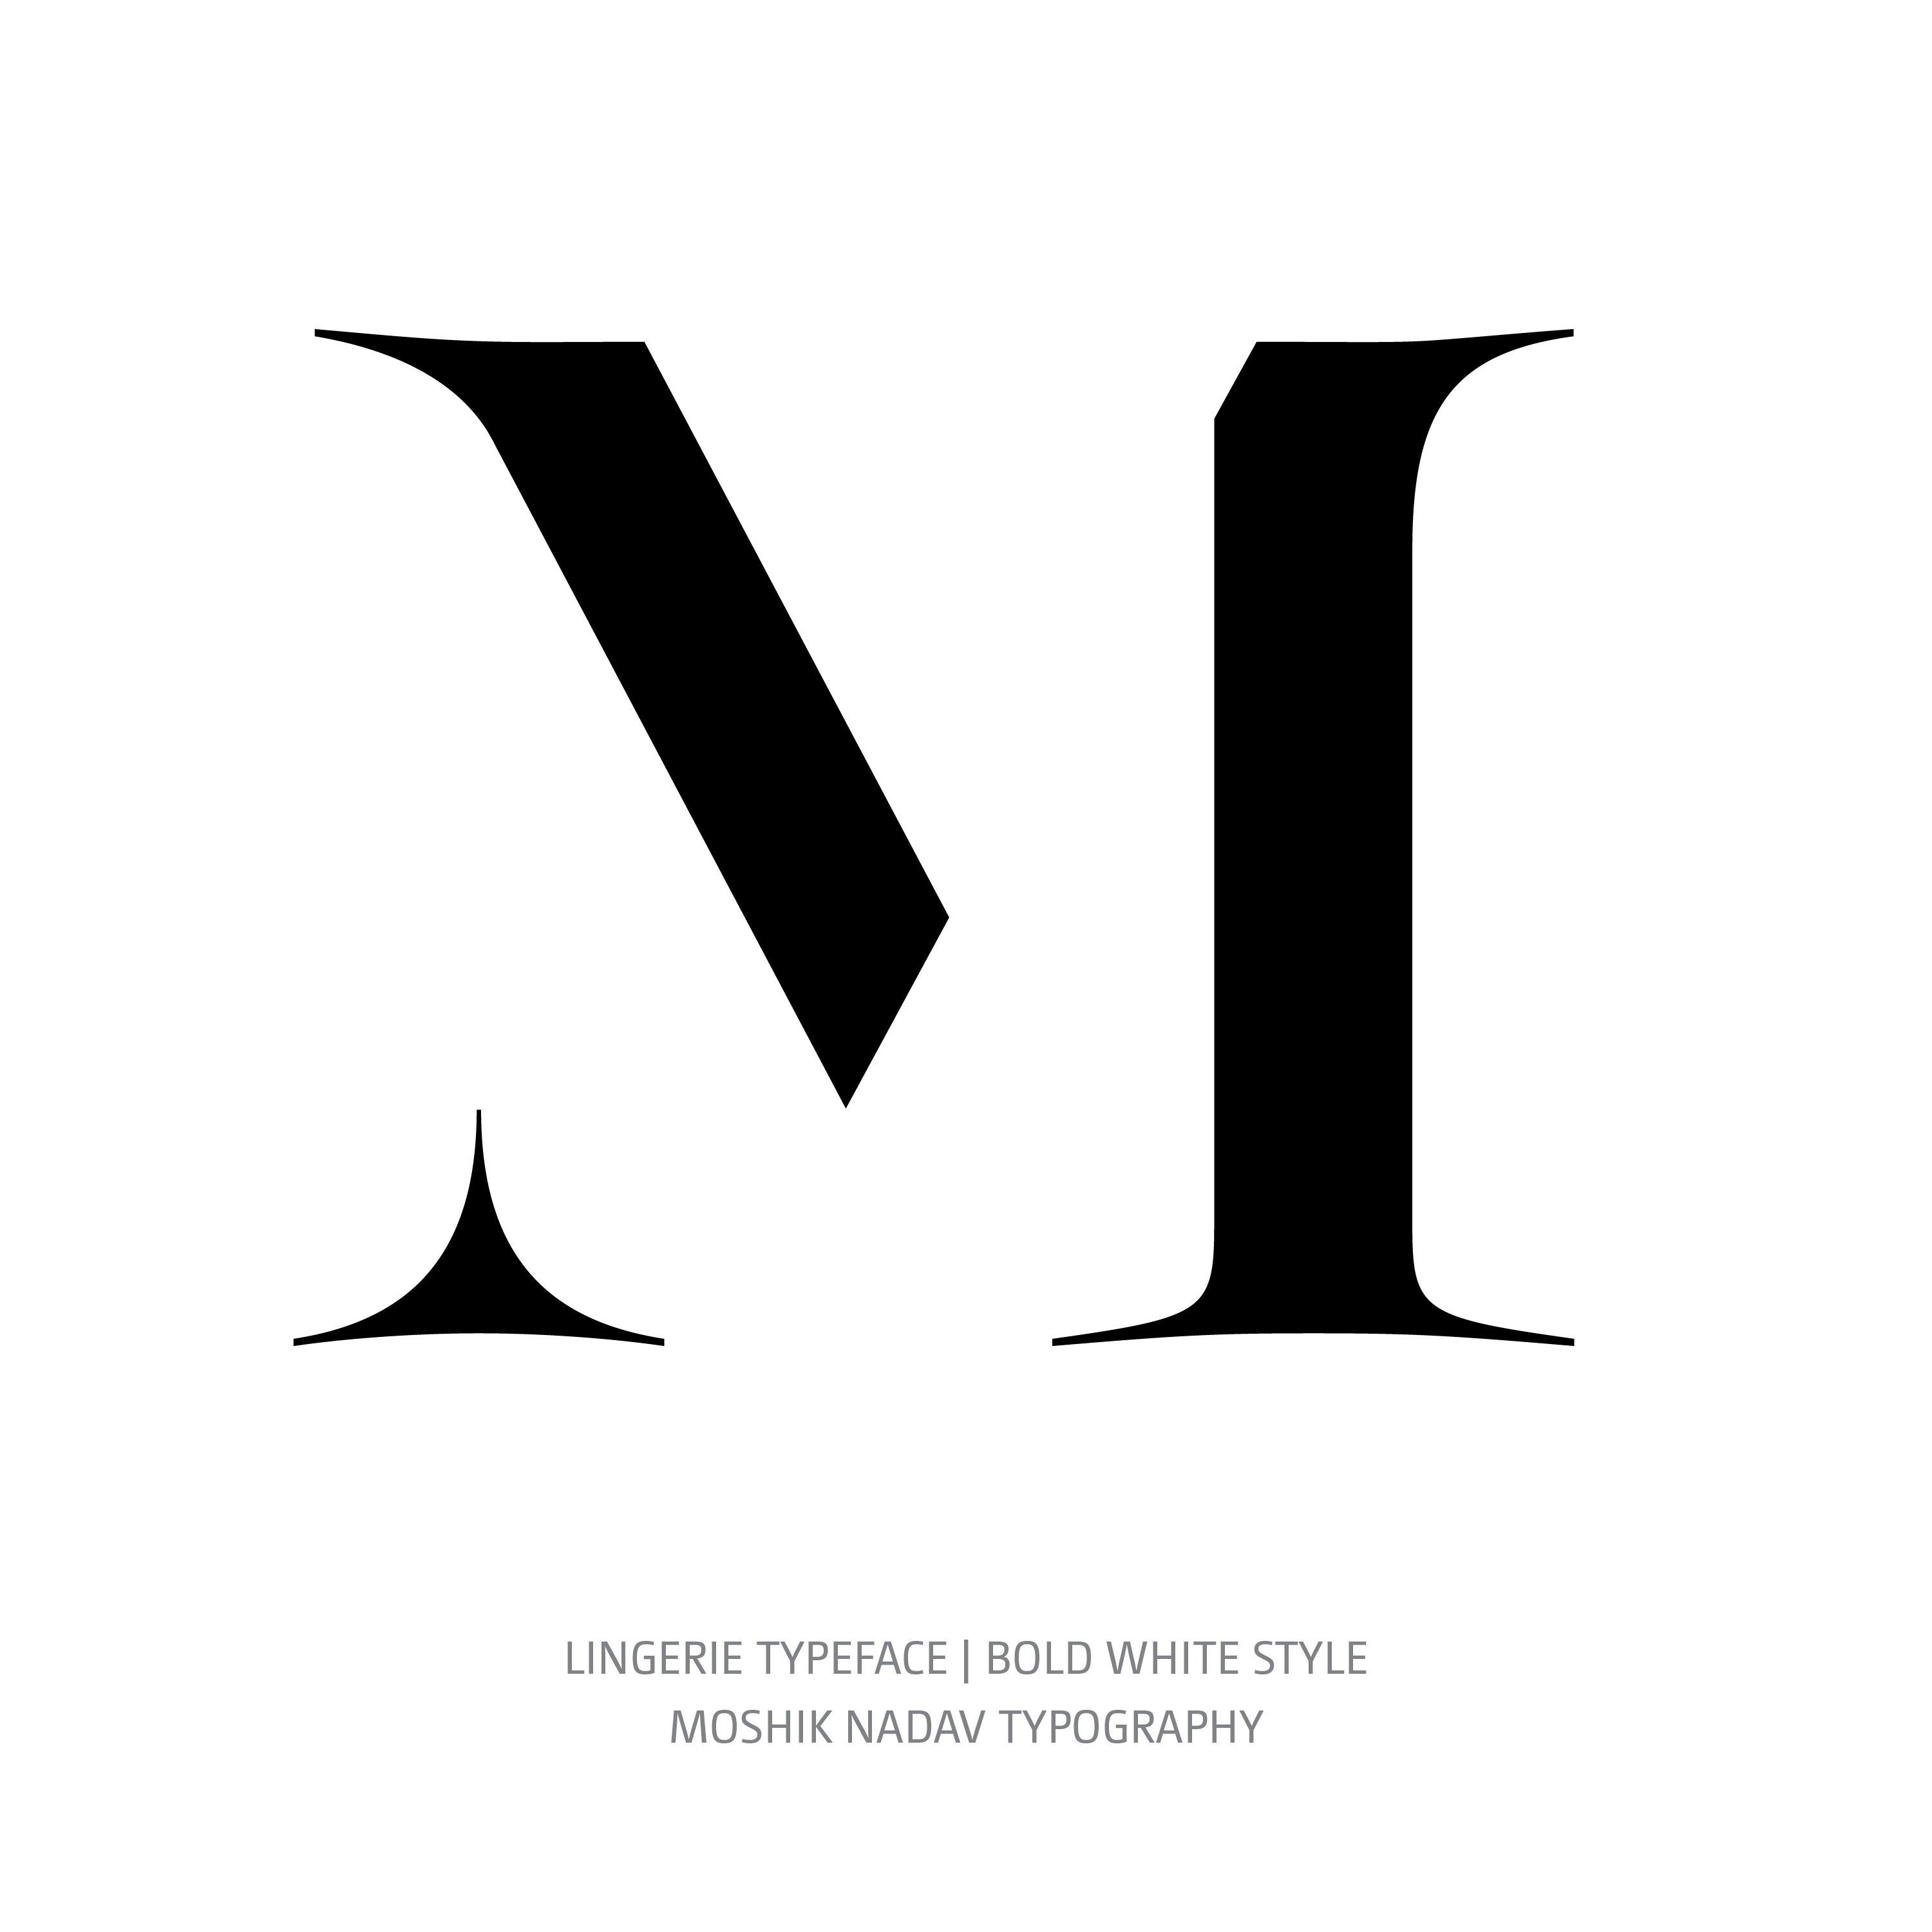 Lingerie Typeface Bold White M